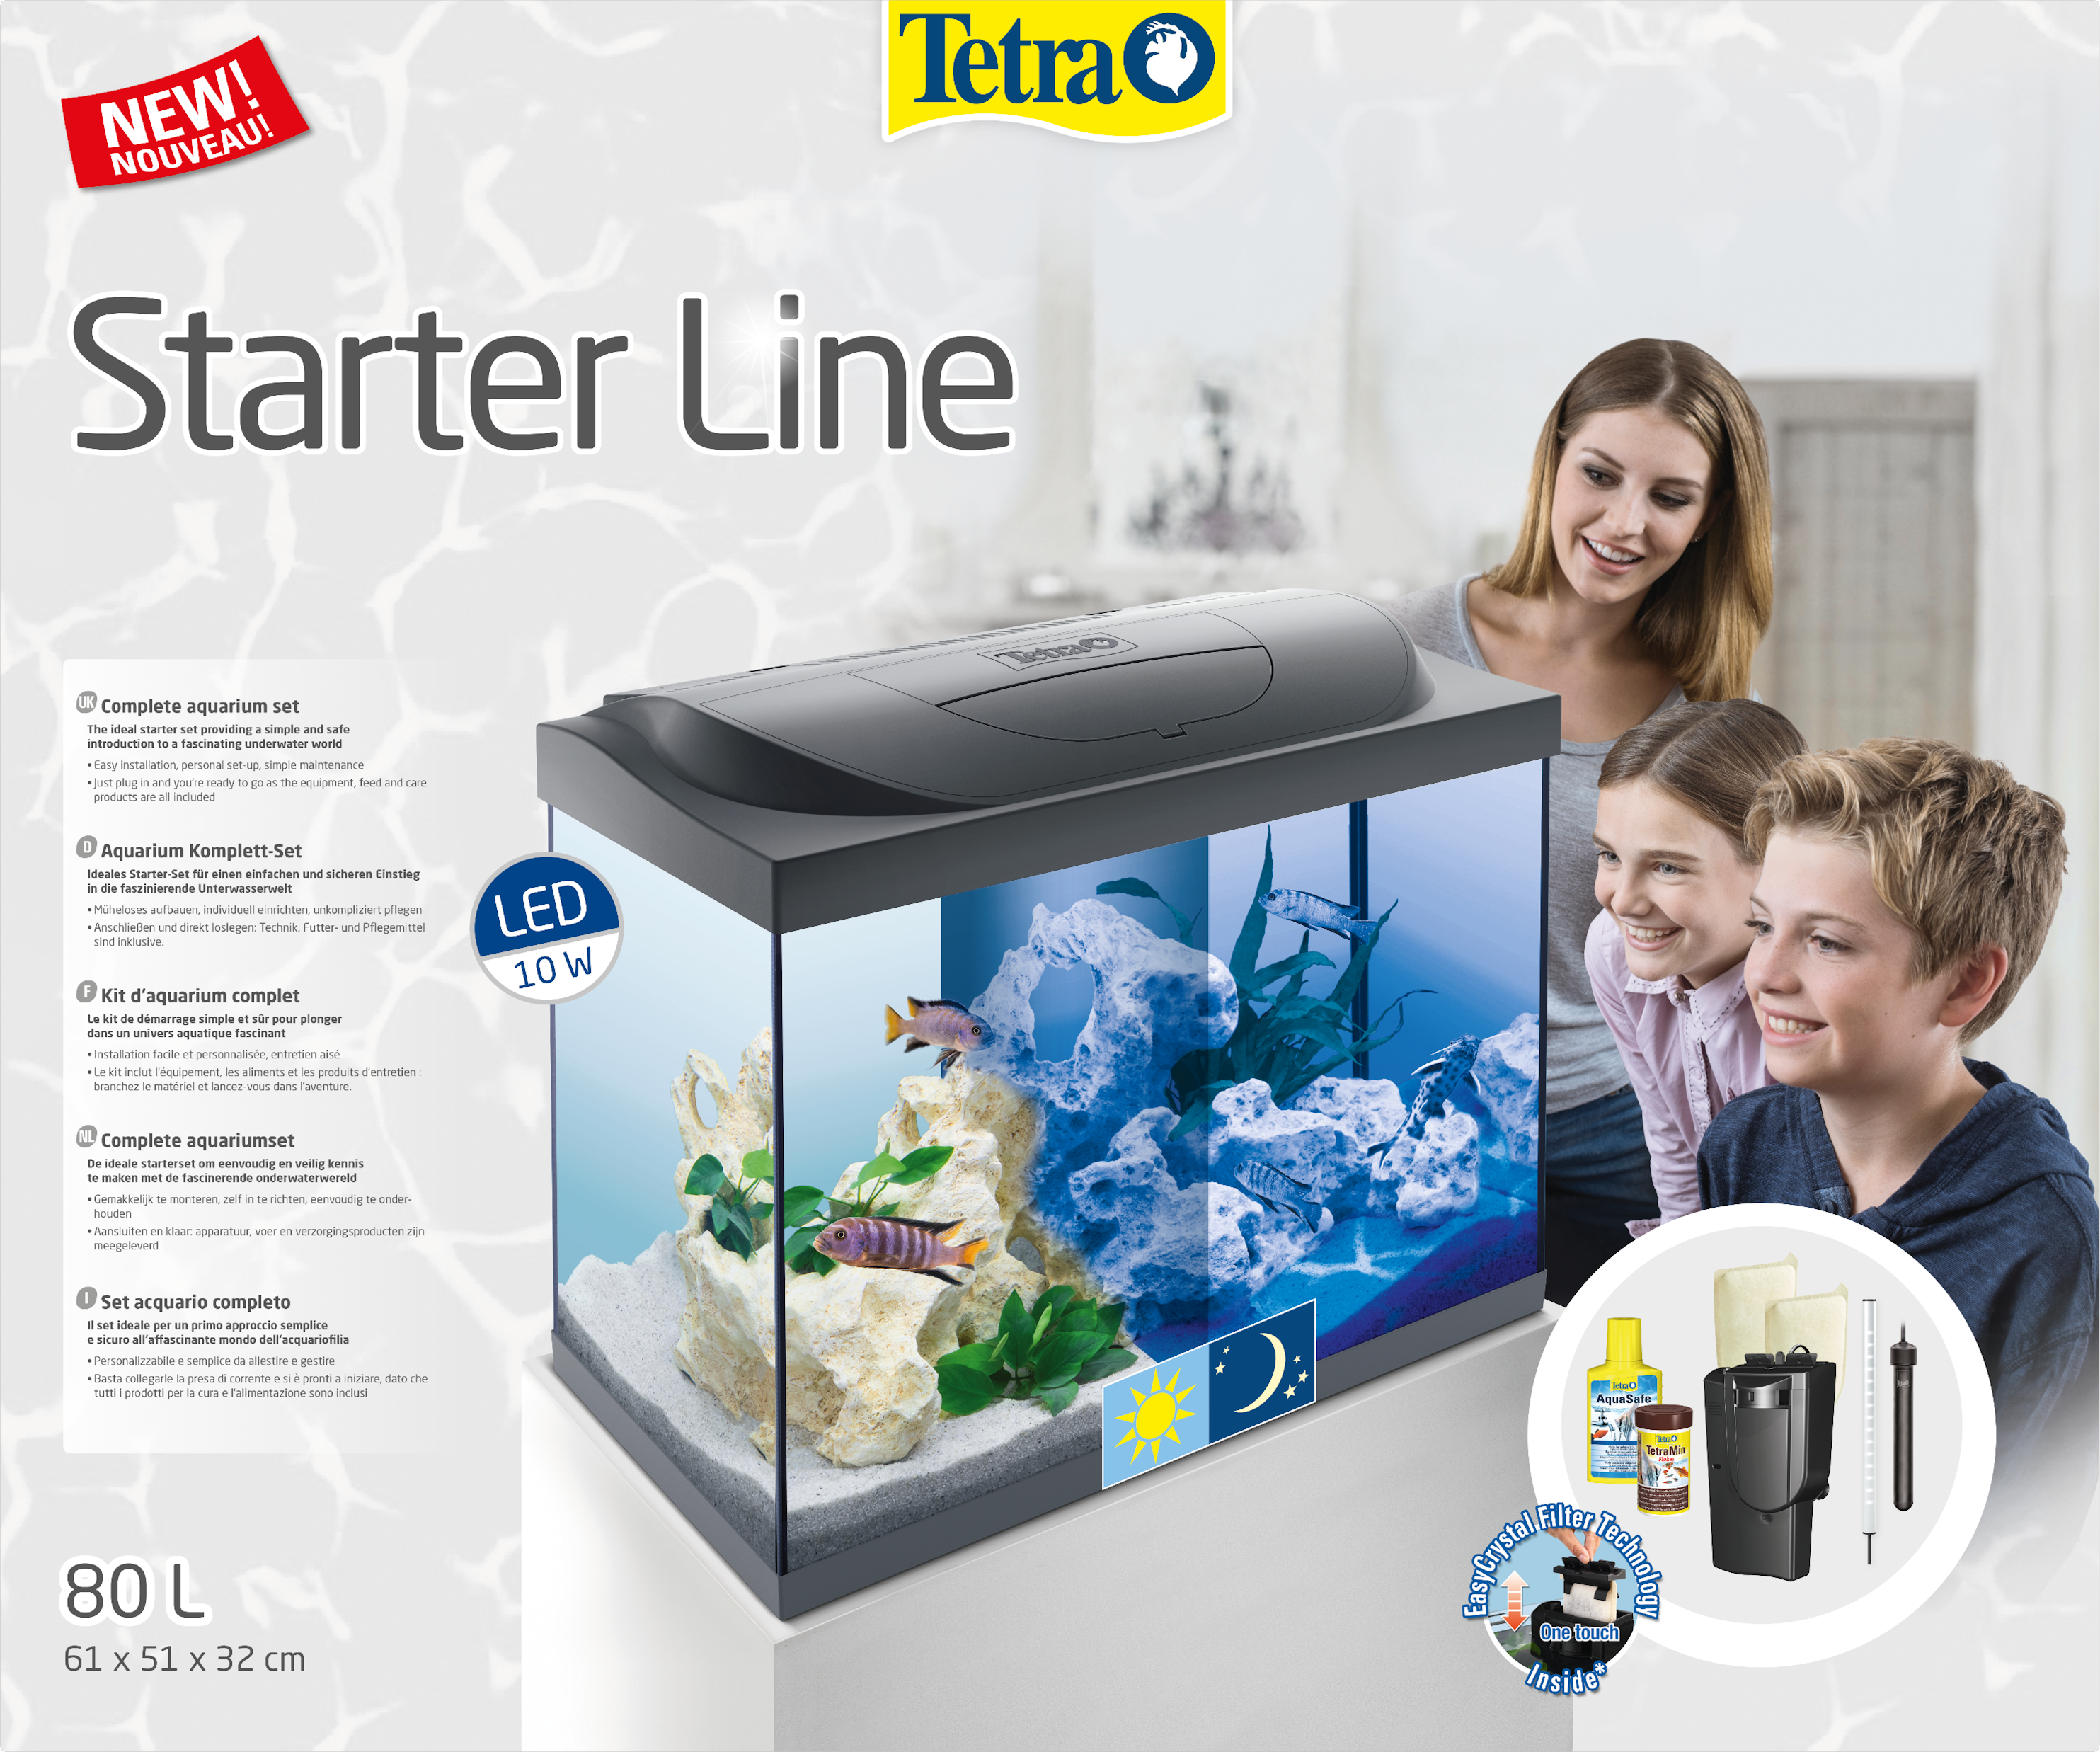 span Dragende cirkel overzee Tetra Starter Line LED 80L aquarium: Tetra